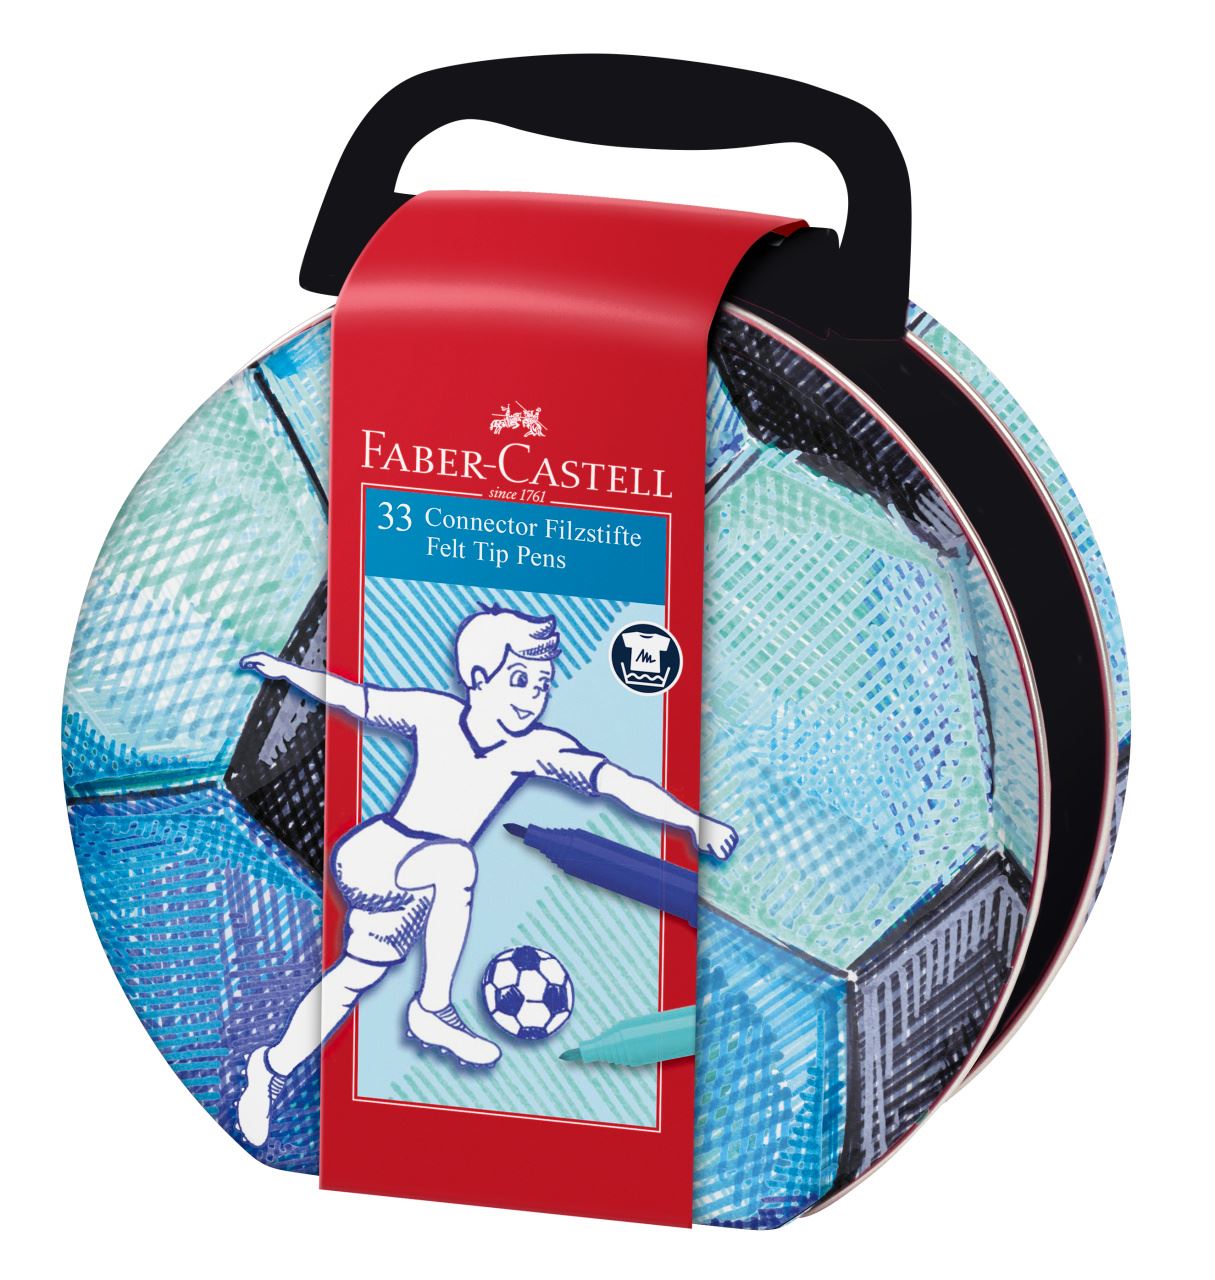 Faber-Castell - Felt tip pen Connector suitcase soccer